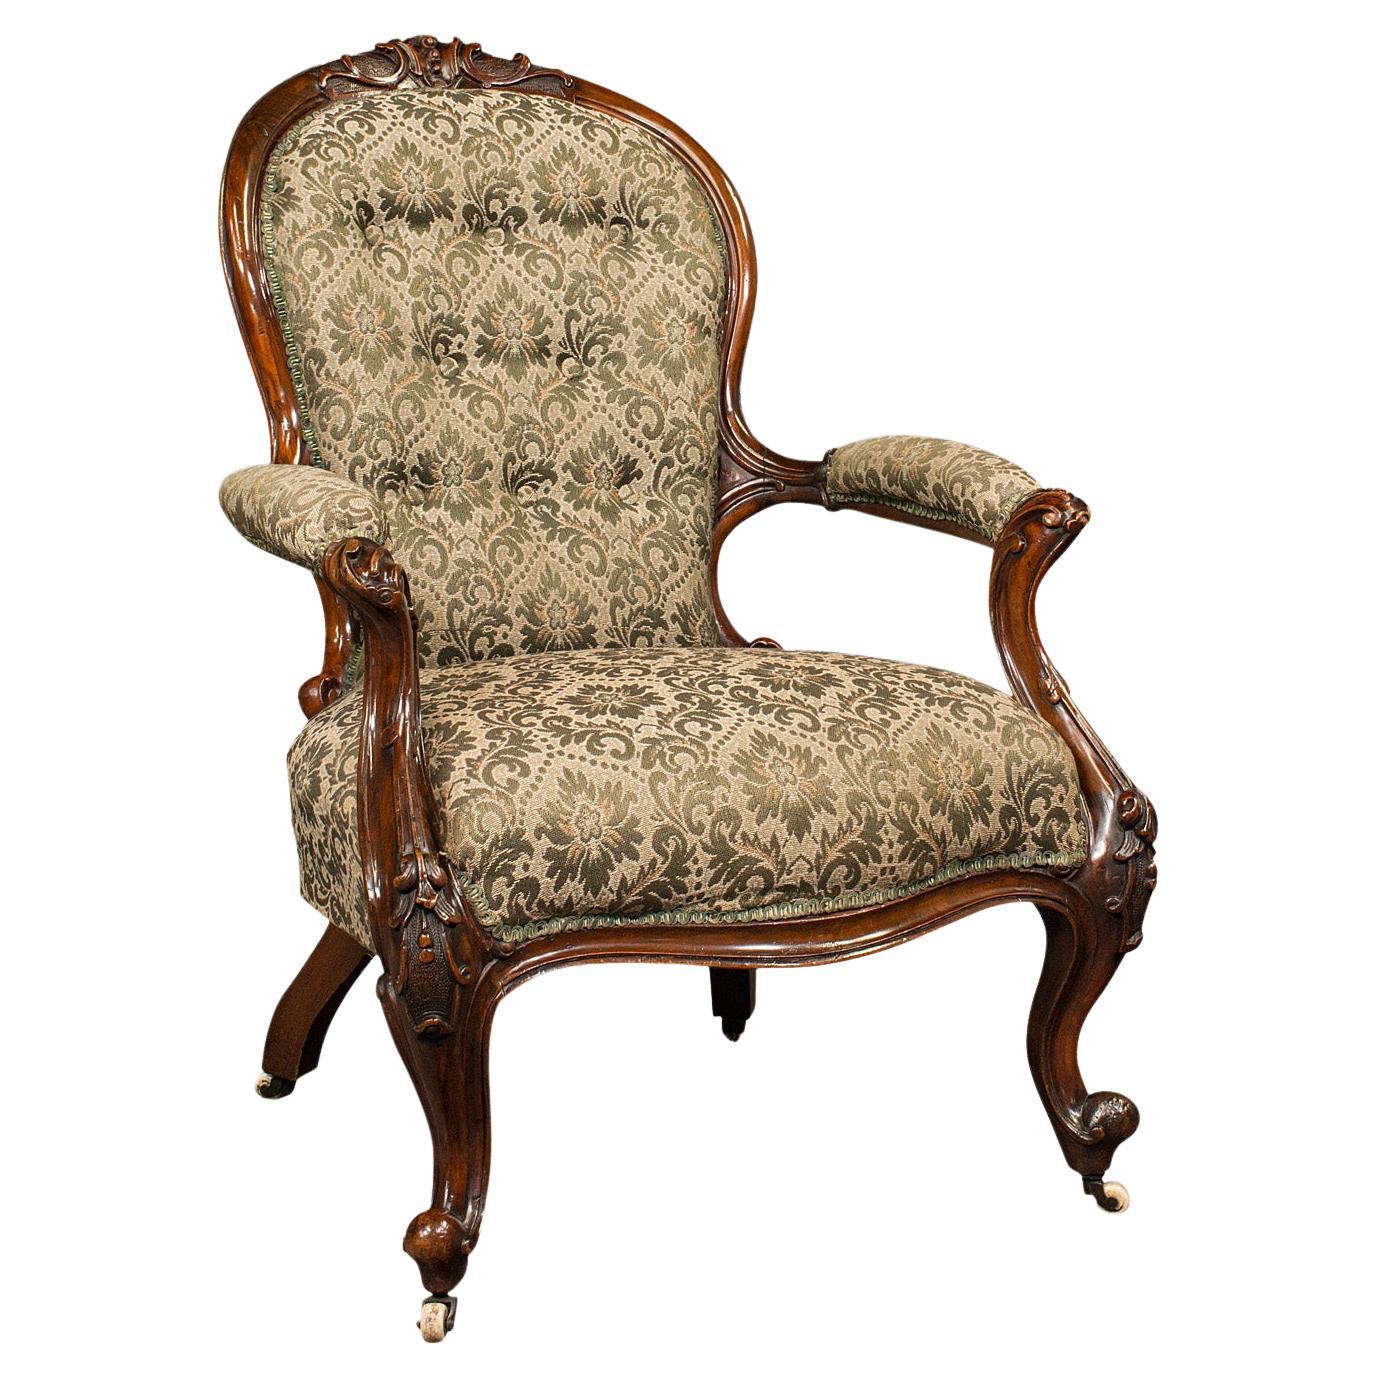 Antique Salon Chair, English, Walnut, Armchair, Early Victorian, circa 1840 For Sale